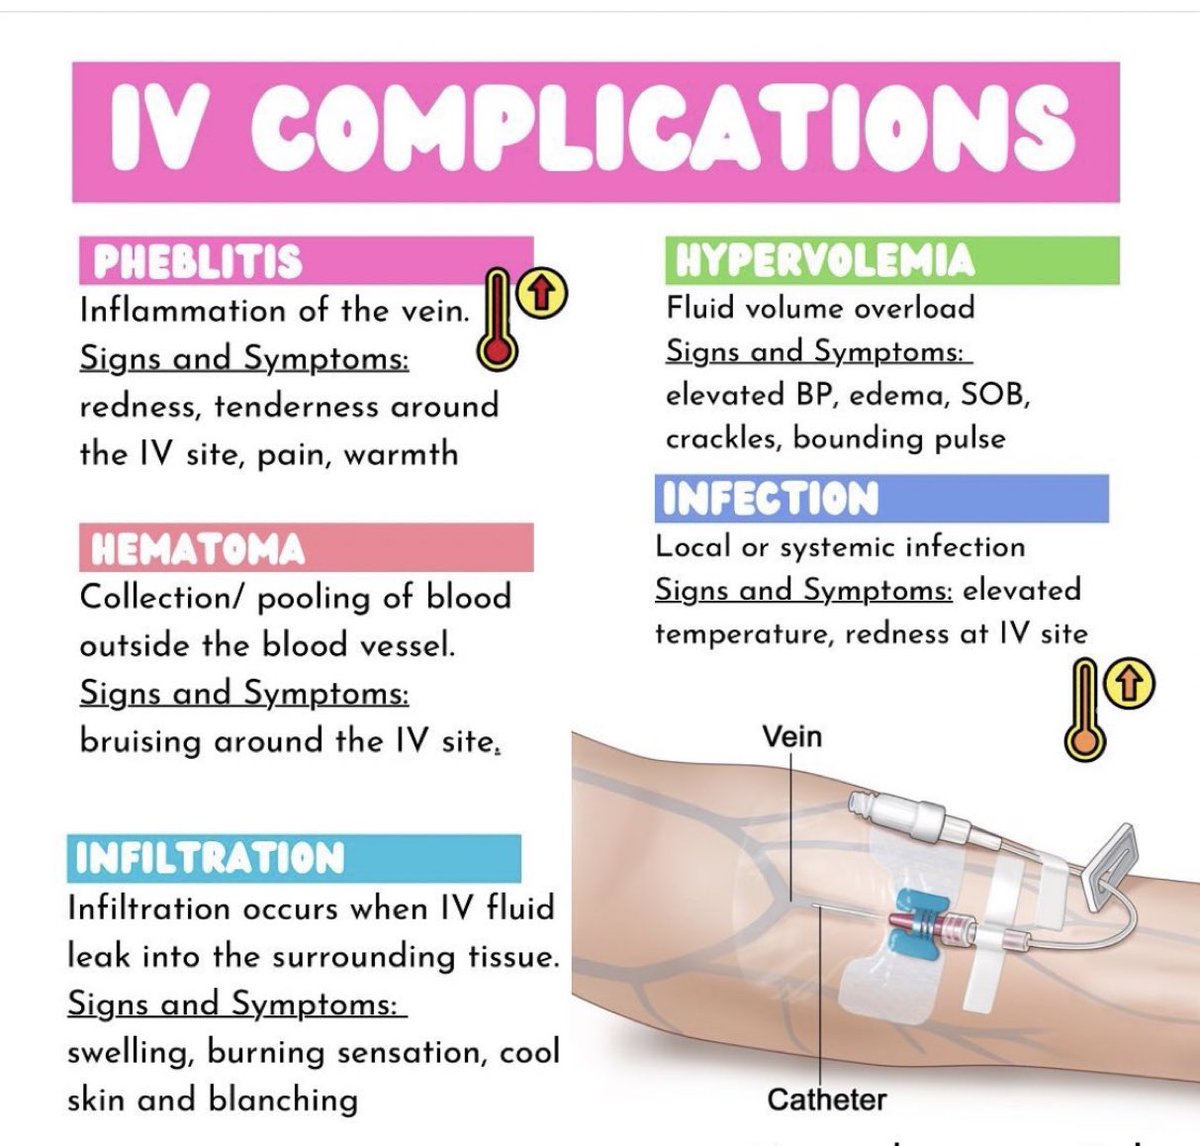 IV complications